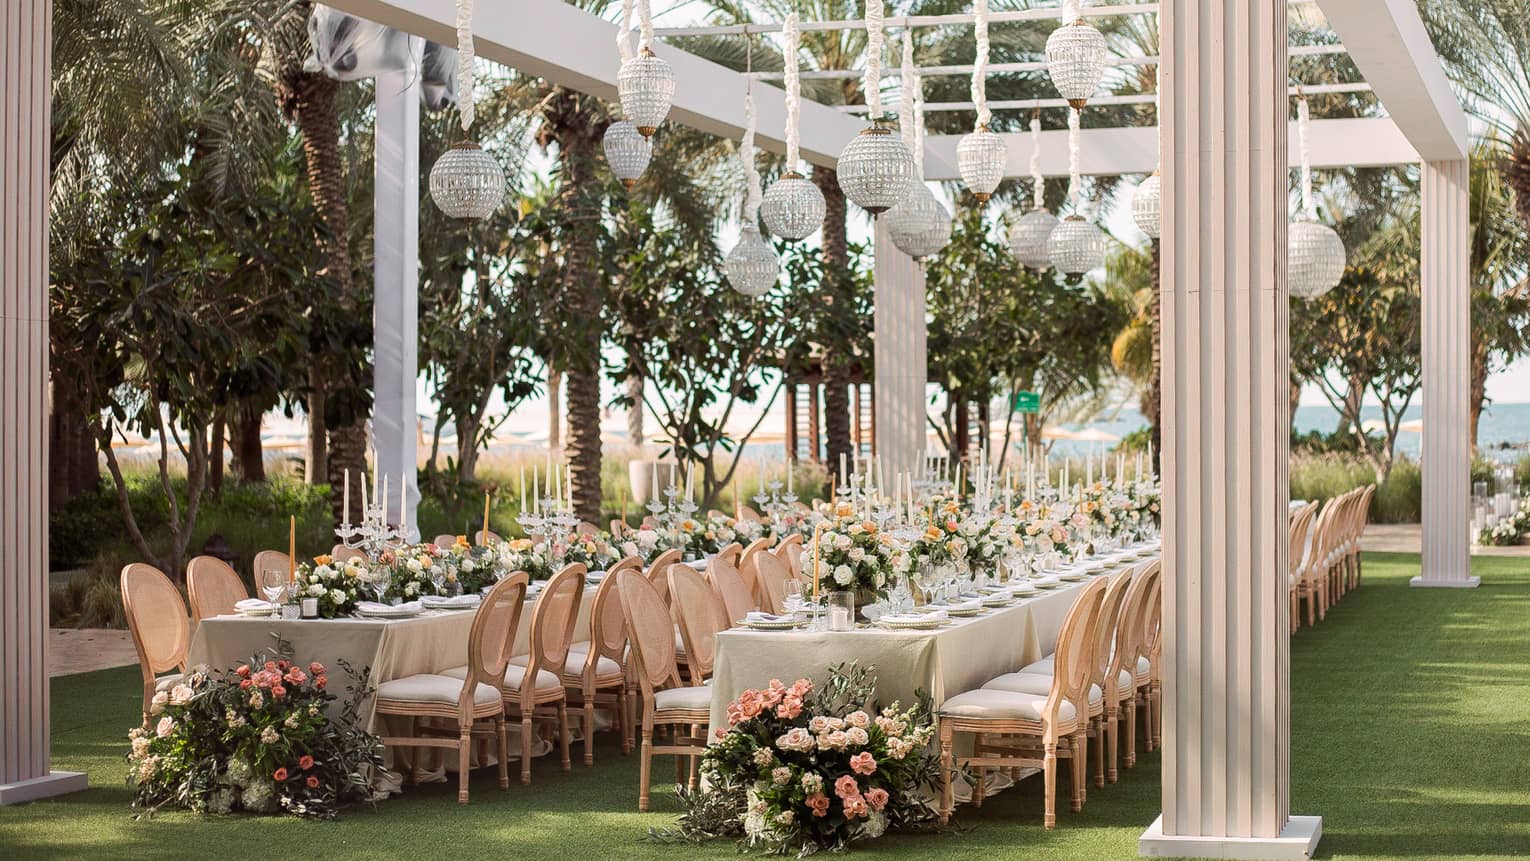 Garden wedding, glass lanterns hang from white pergola over long dining tables